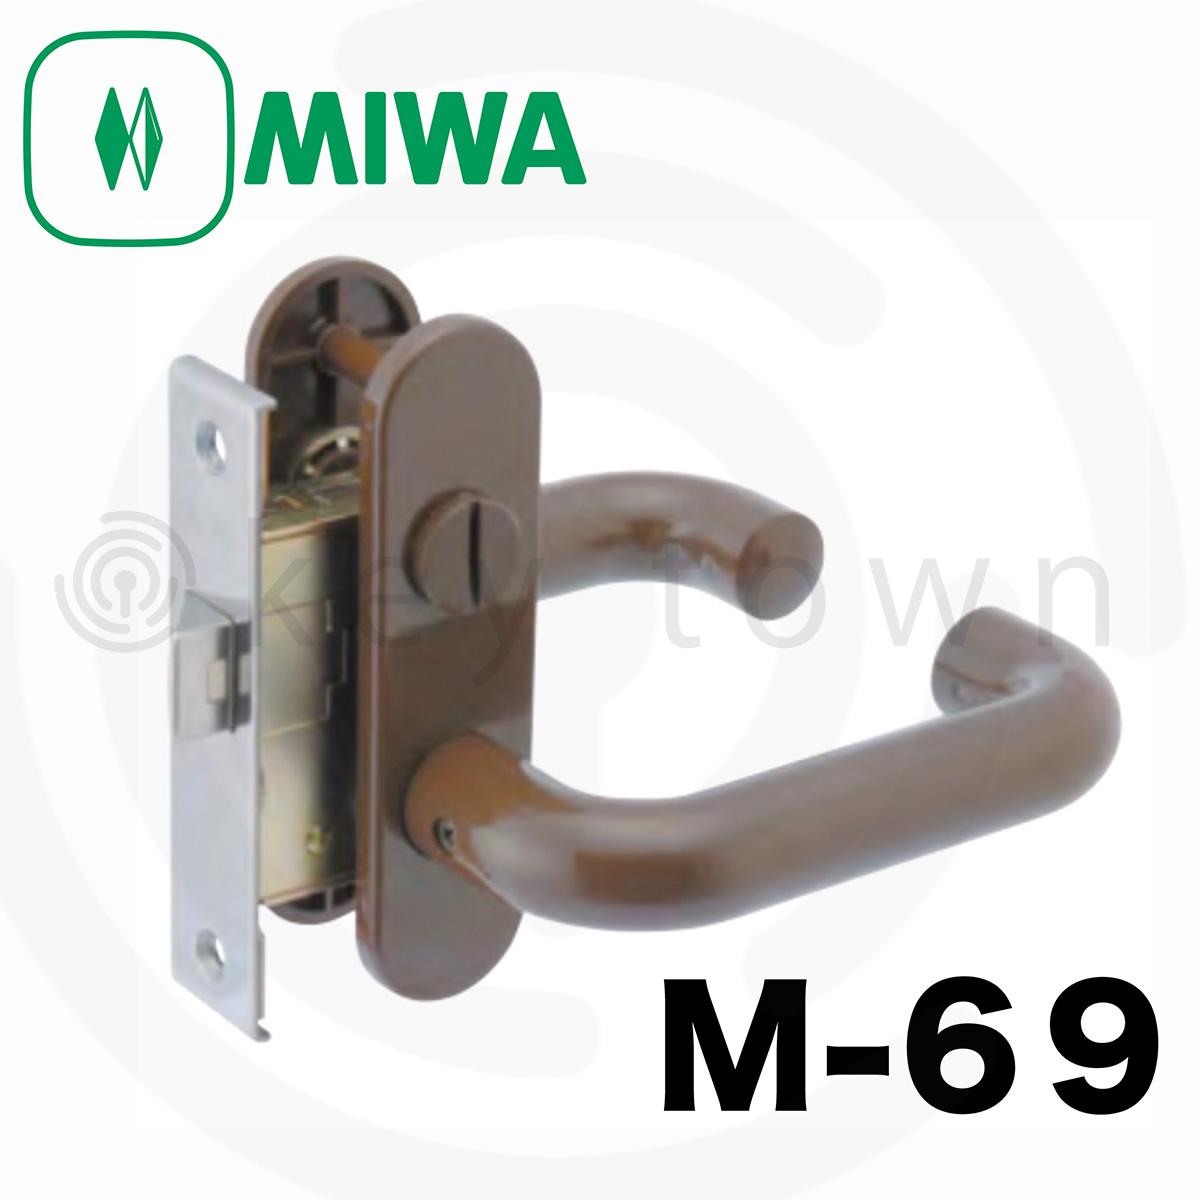 MIWA 【美和ロック】 特殊錠 浴室錠 [MIWA-M-69] Kシリーズ[M-69]｜鍵